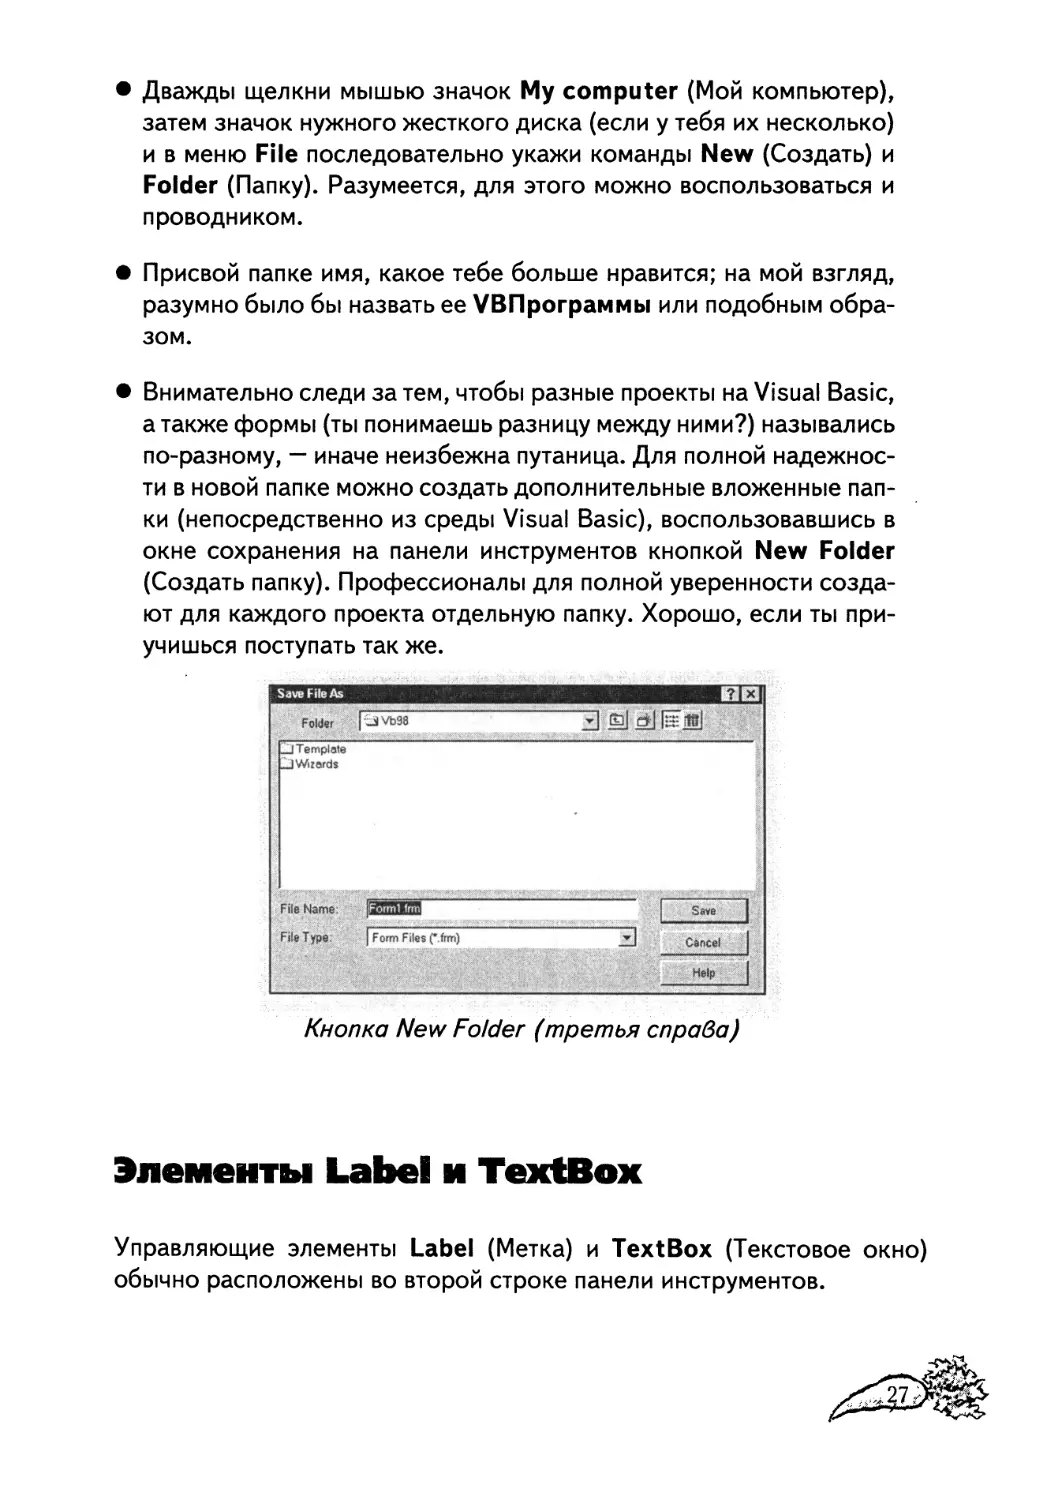 Элементы Label и TextBox